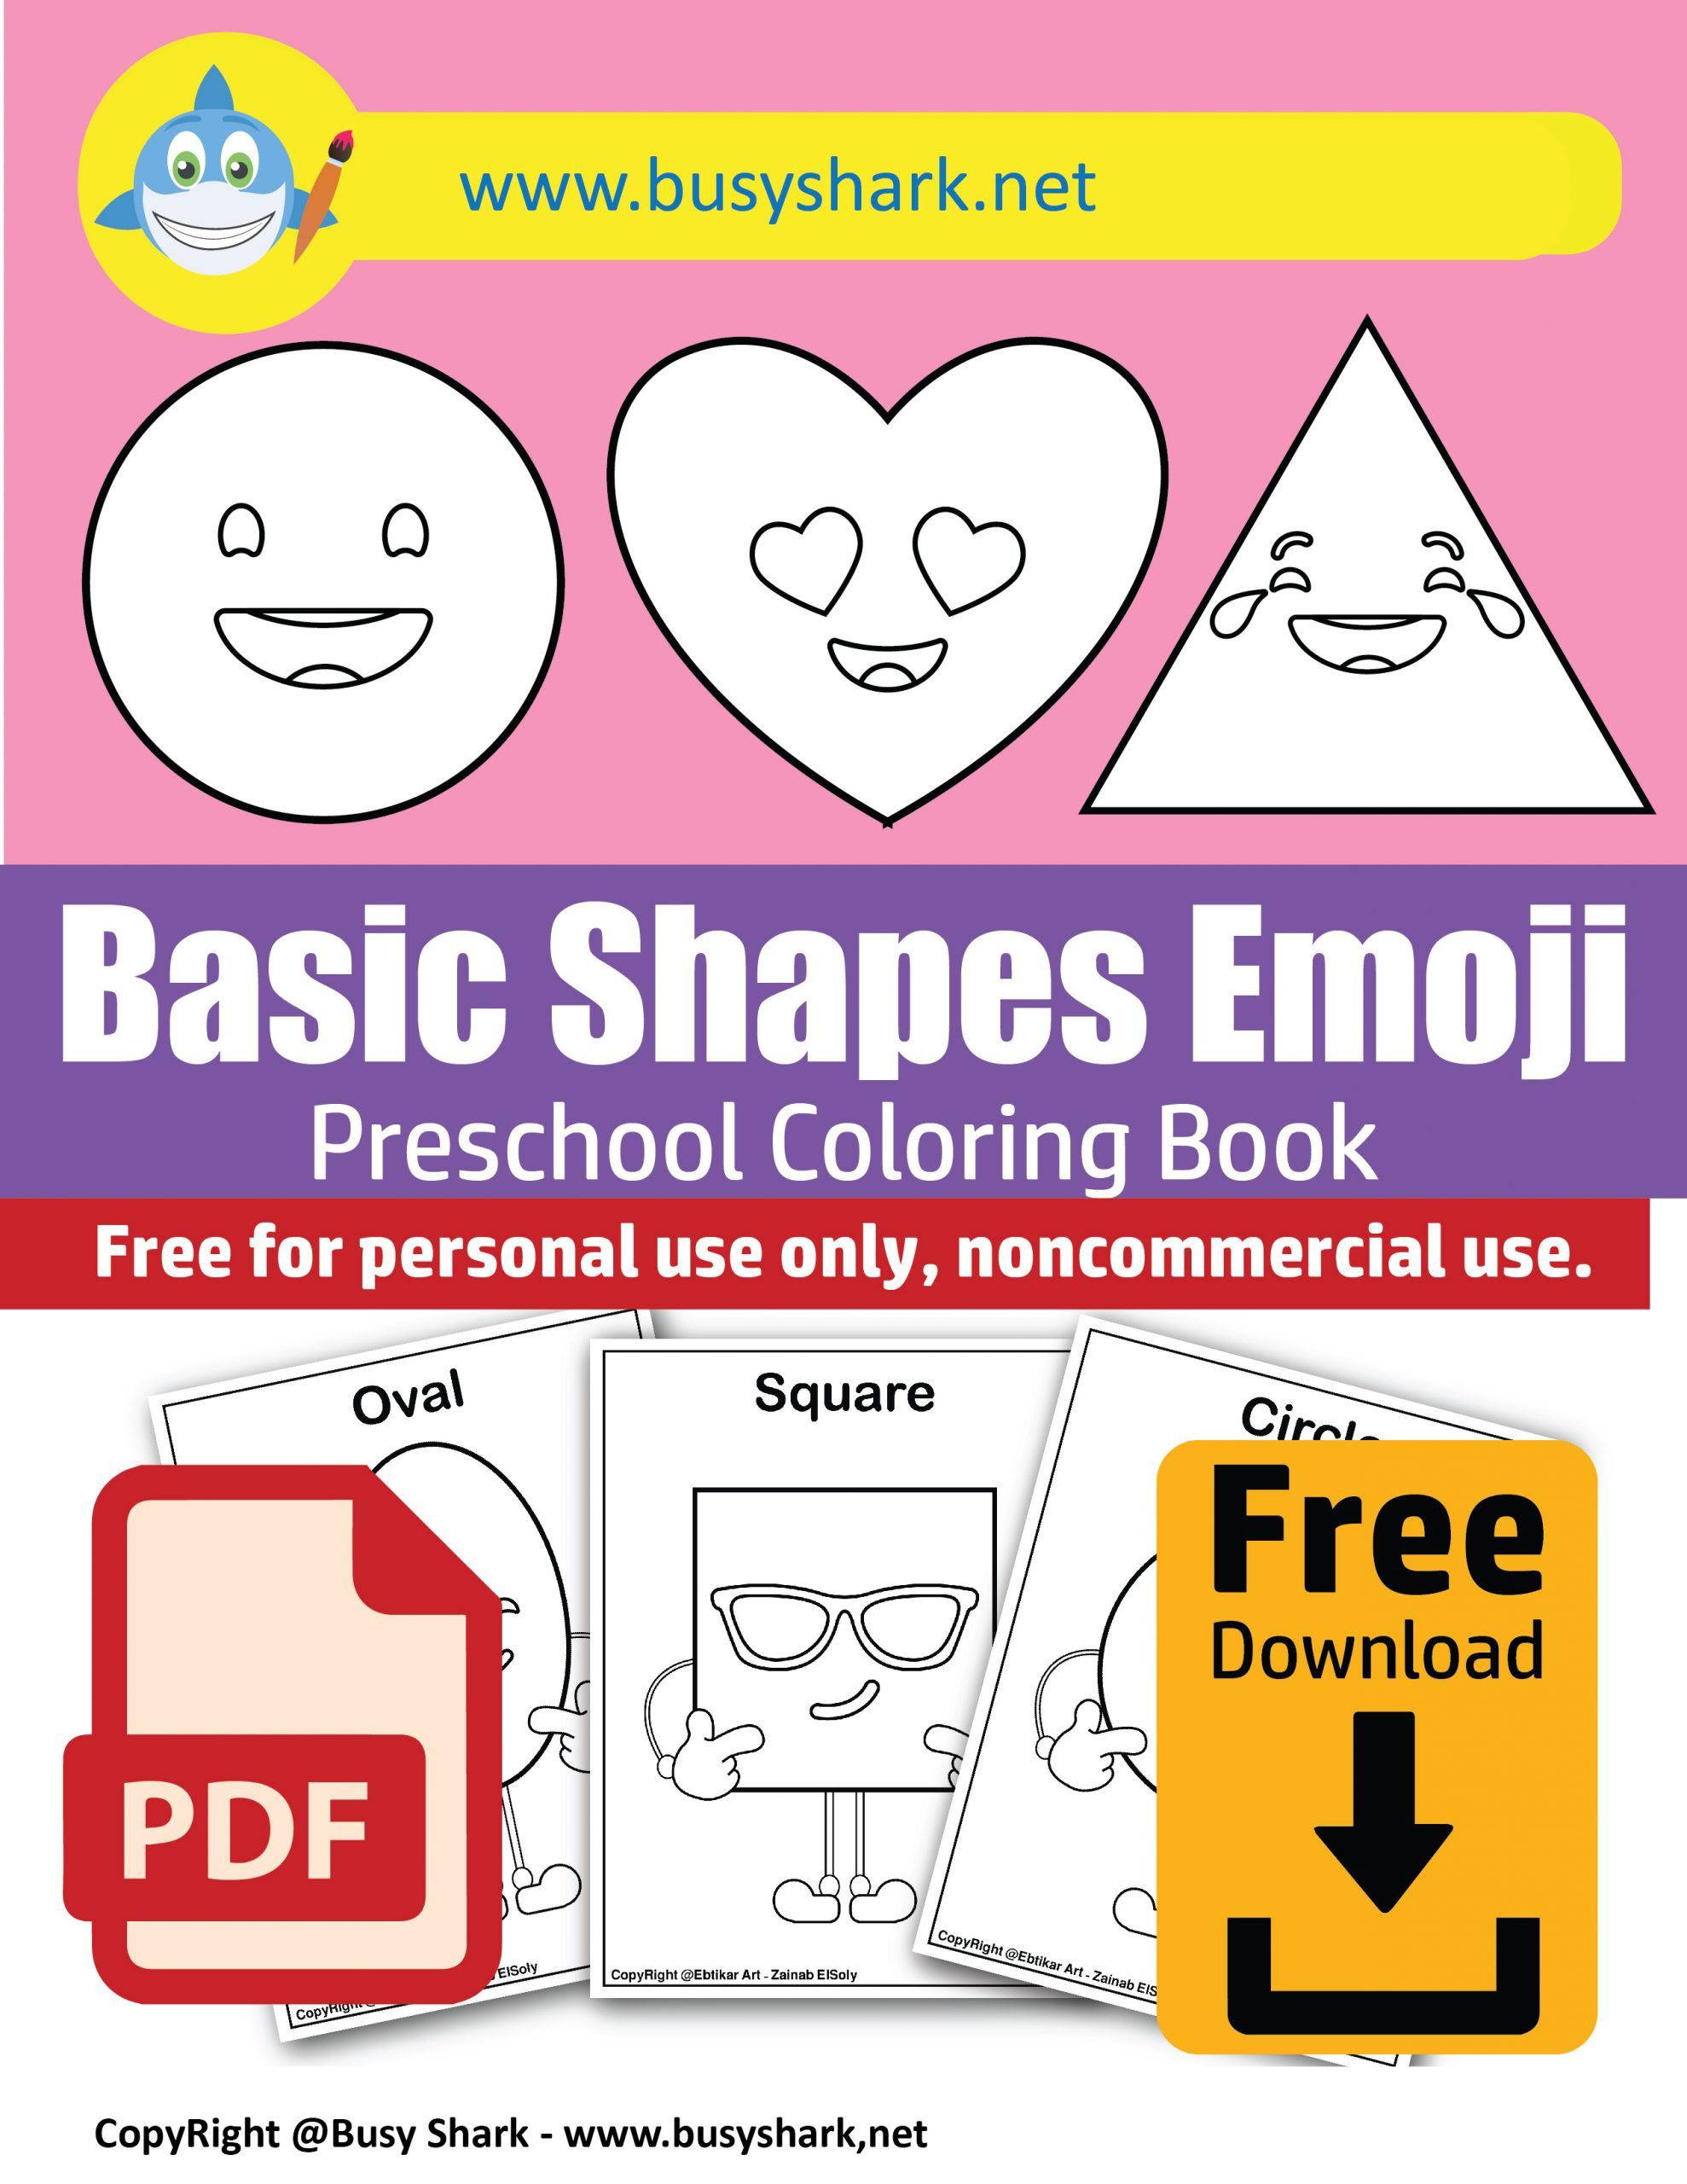 Basic shapes emoji cartoon faces free preschool coloring book